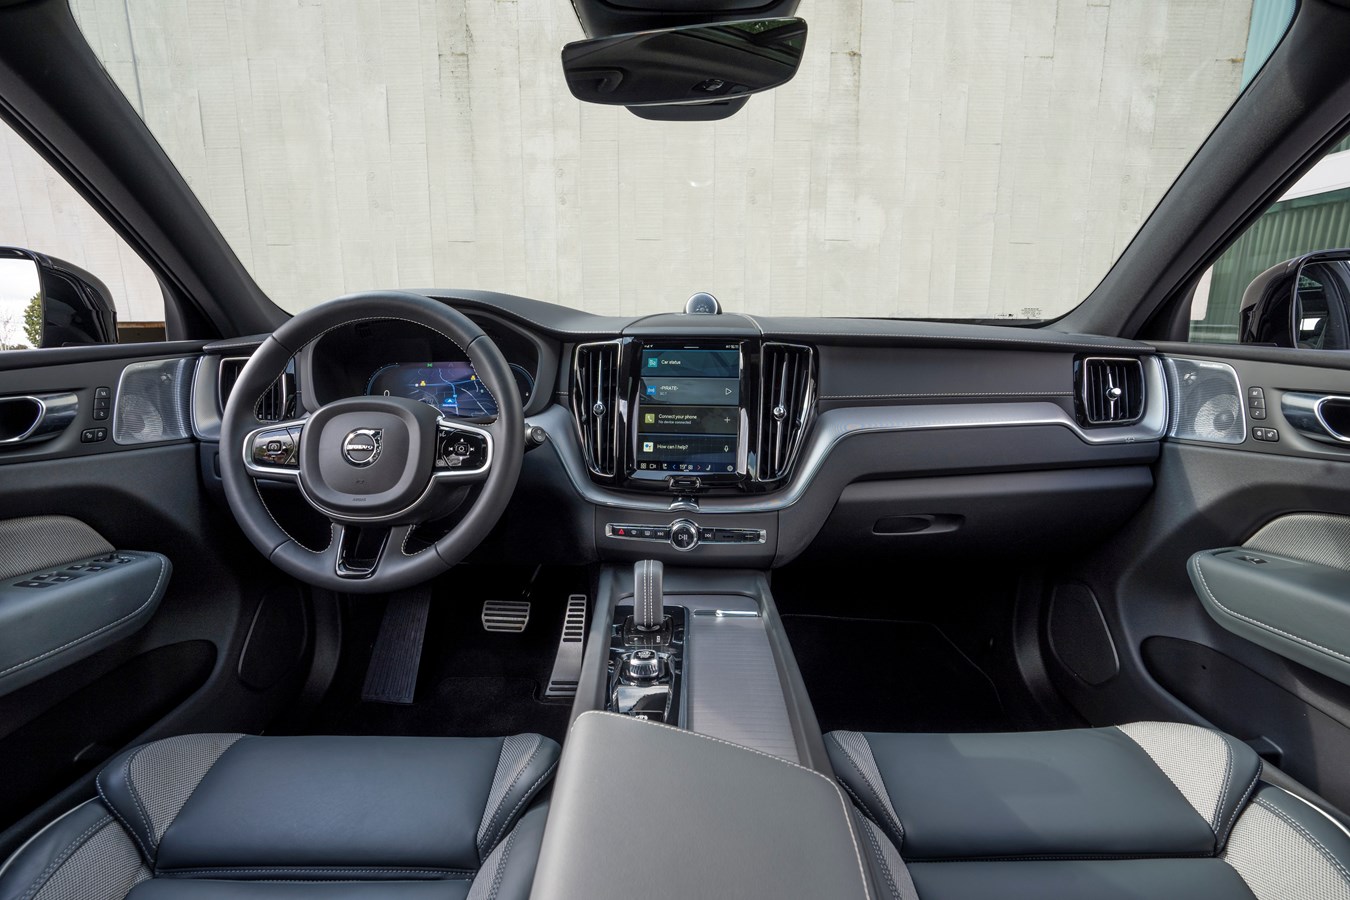 Volvo XC60 fron seats and steering wheel